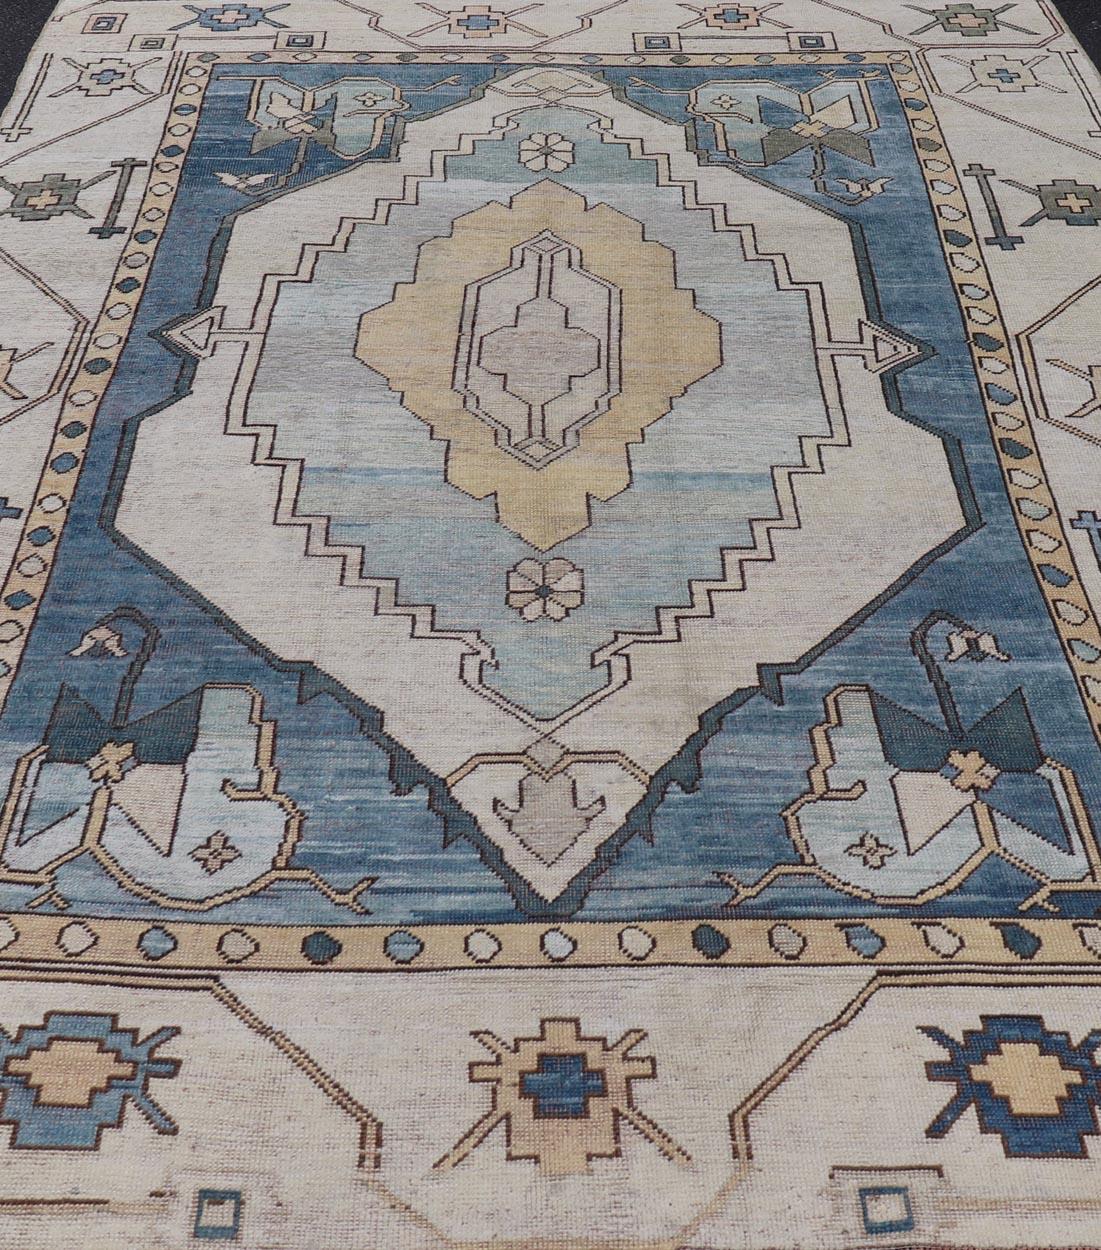 Vintage Turkish Oushak Rug with Geometric Medallion & Tribal Design. Keivan Woven Arts / rug EN-179978, country of origin / type: Turkey / Oushak, circa 1950
Measures: 8'0 x 11'0 
This vintage Oushak carpet from mid-20th century Turkey features a